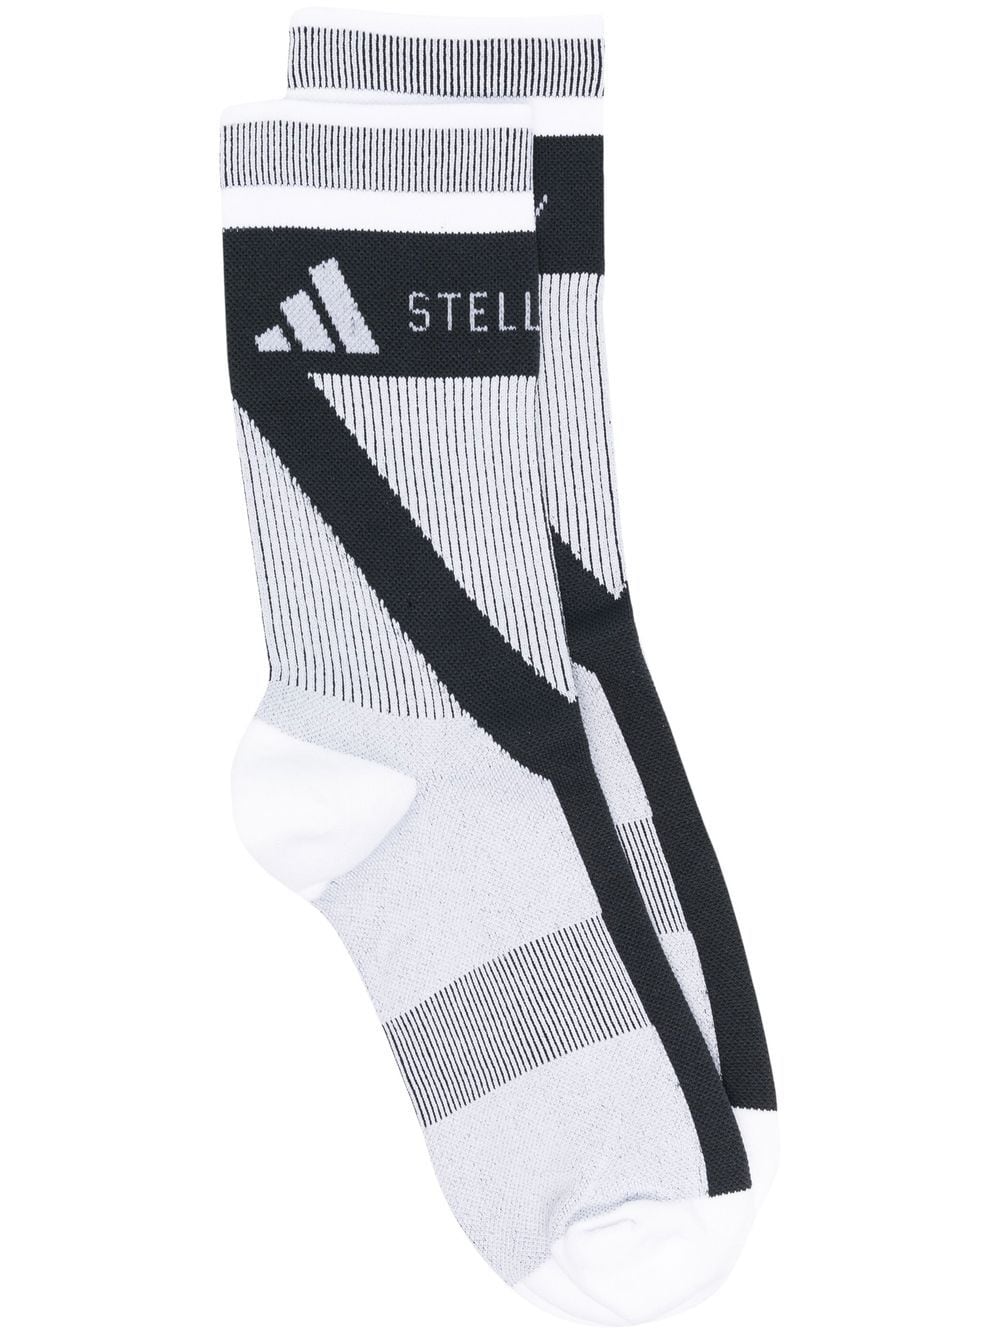 Blac/white intarsia-knit logo socks